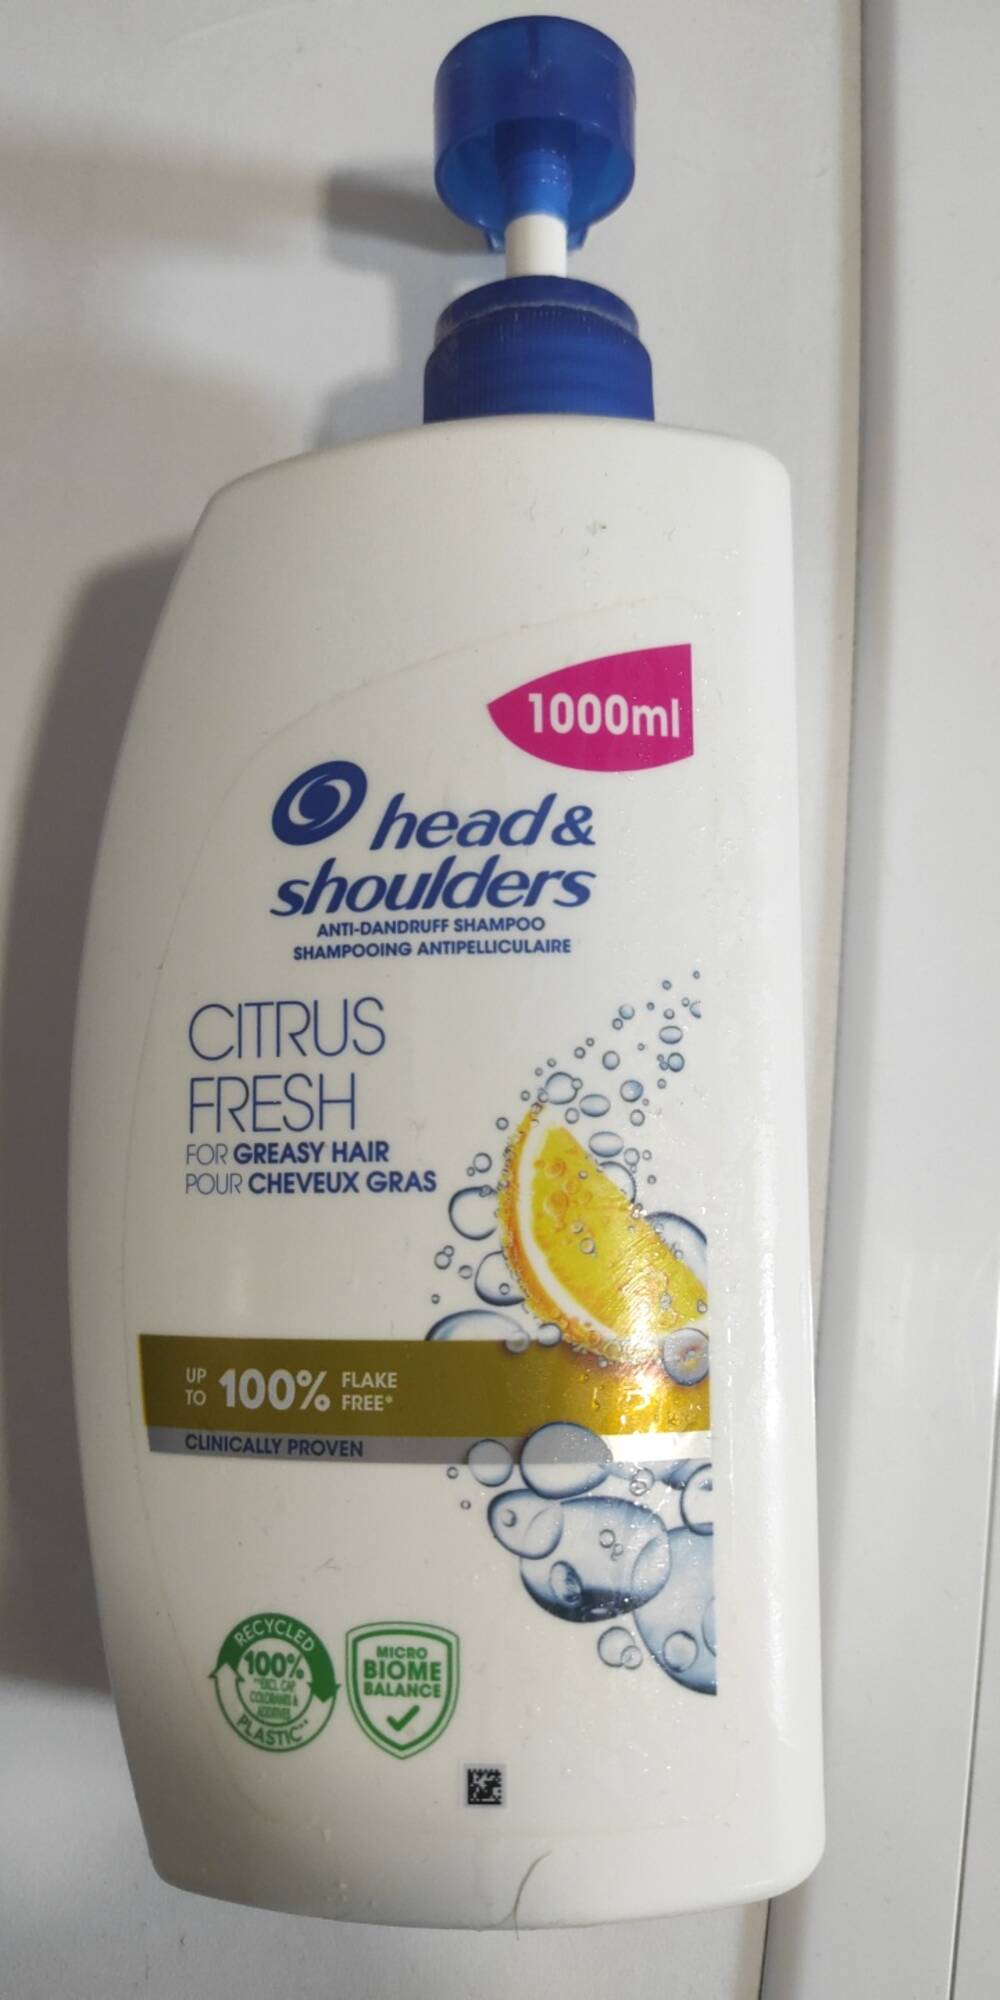 HEAD & SHOULDERS - Citrus fresh - Shampooings antipelliculaire 